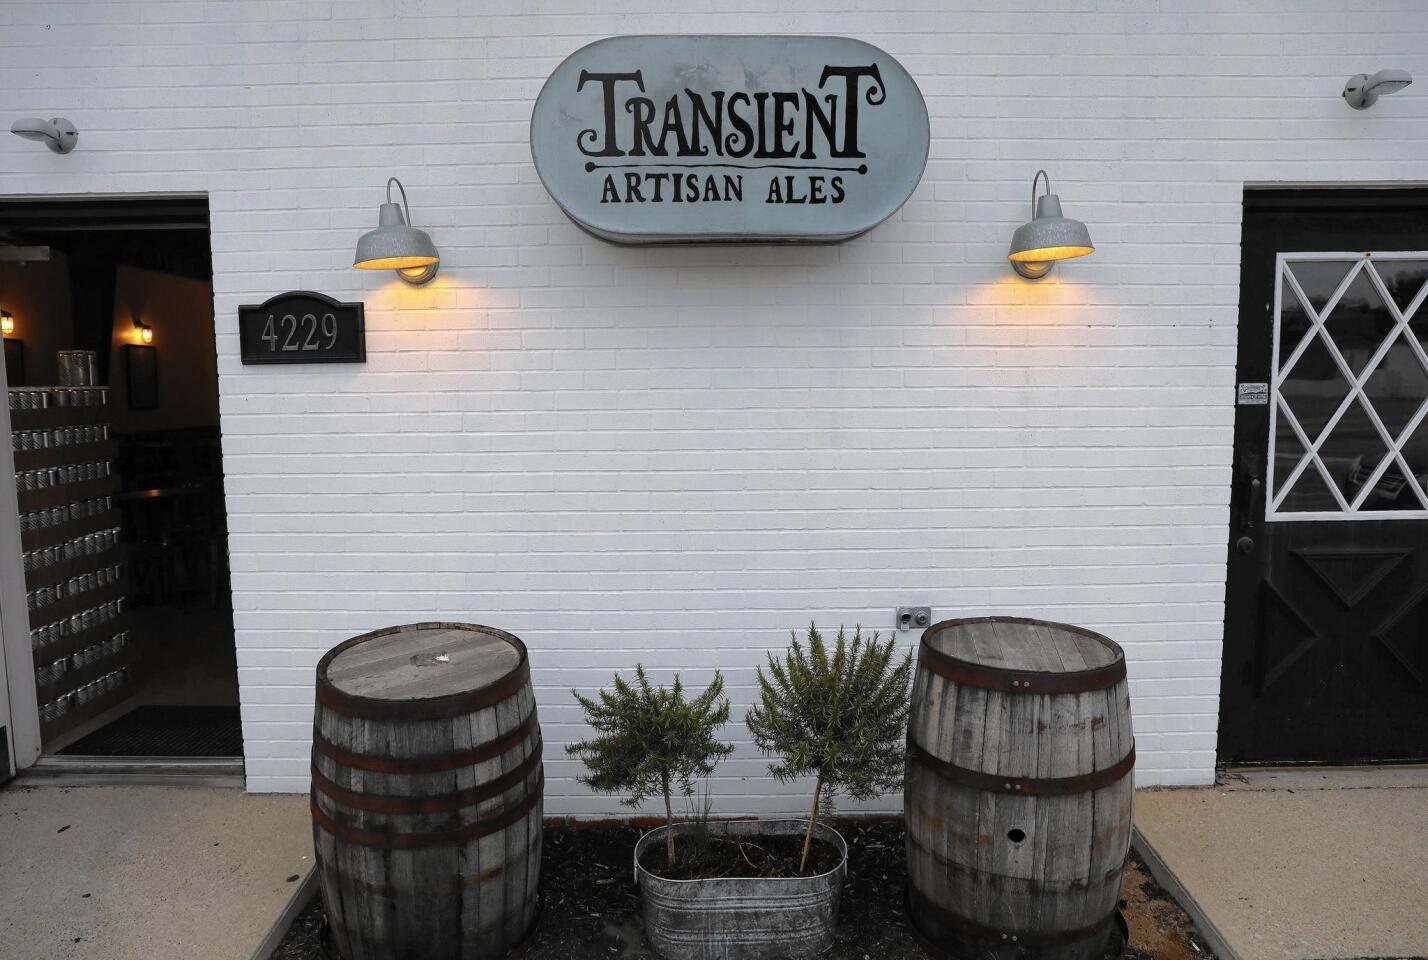 Transient Artisan Ales is one of three breweries in tiny Bridgman, Mich.